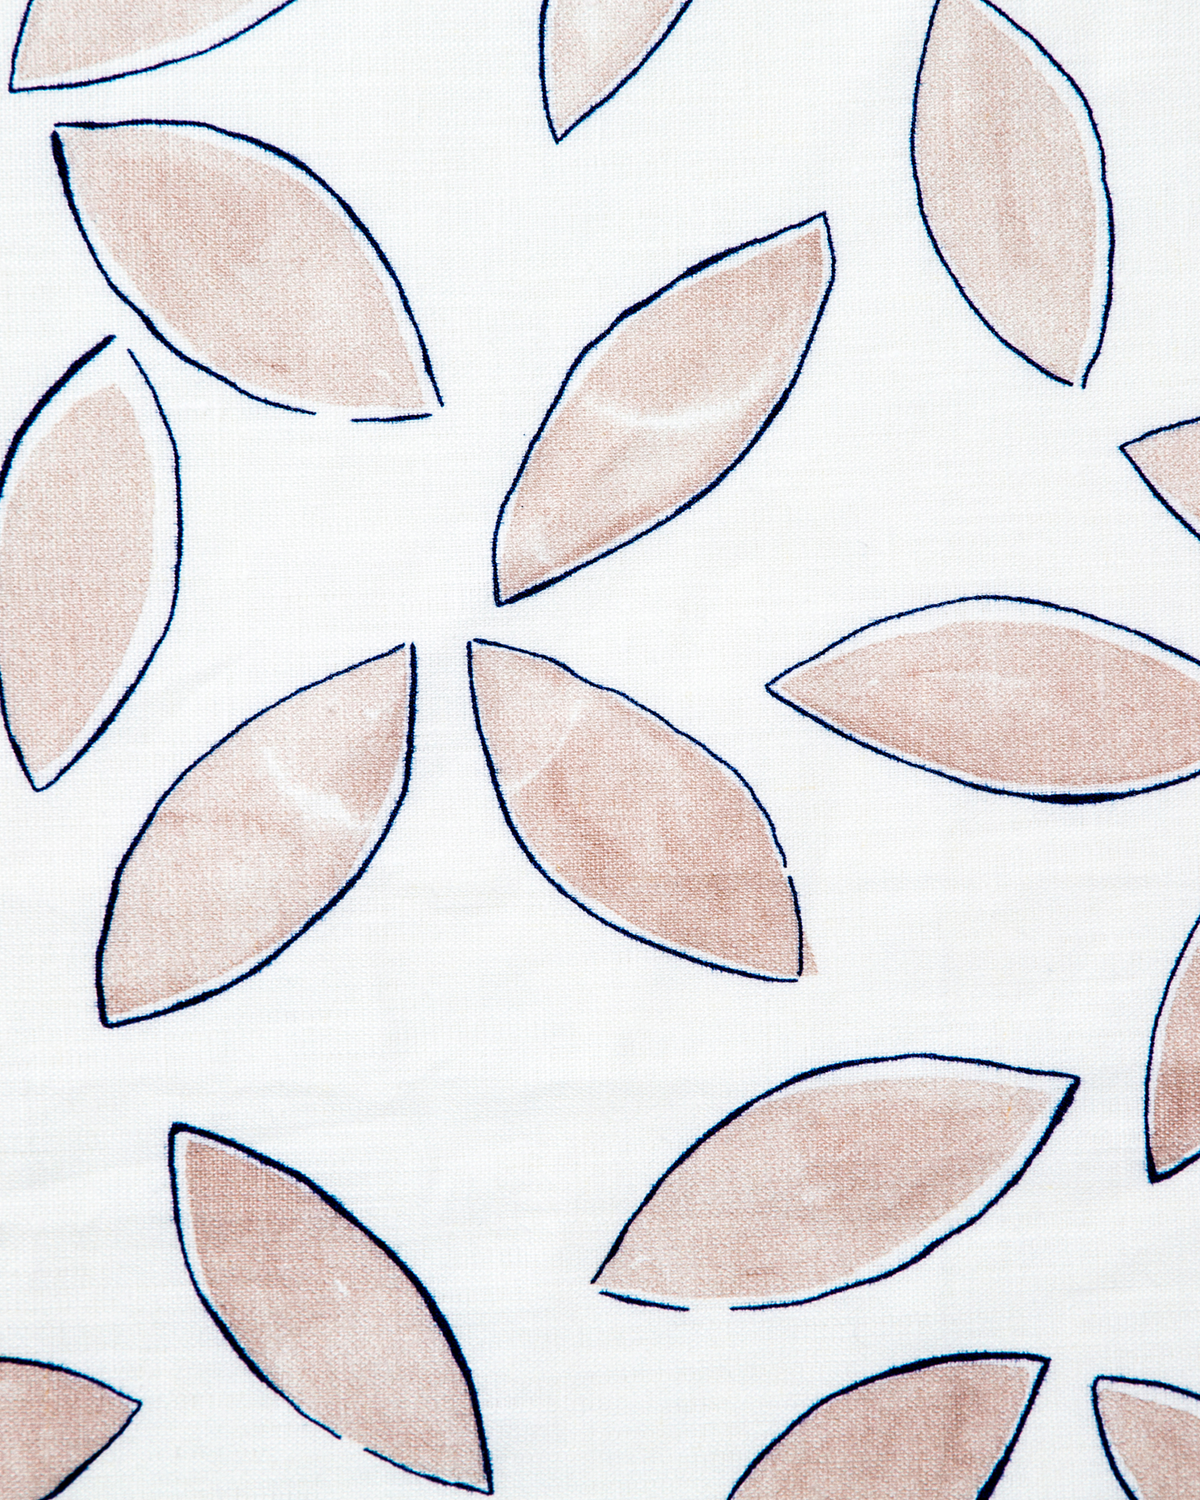 Leaves Fabric in Coffee/Blauvelt Blue